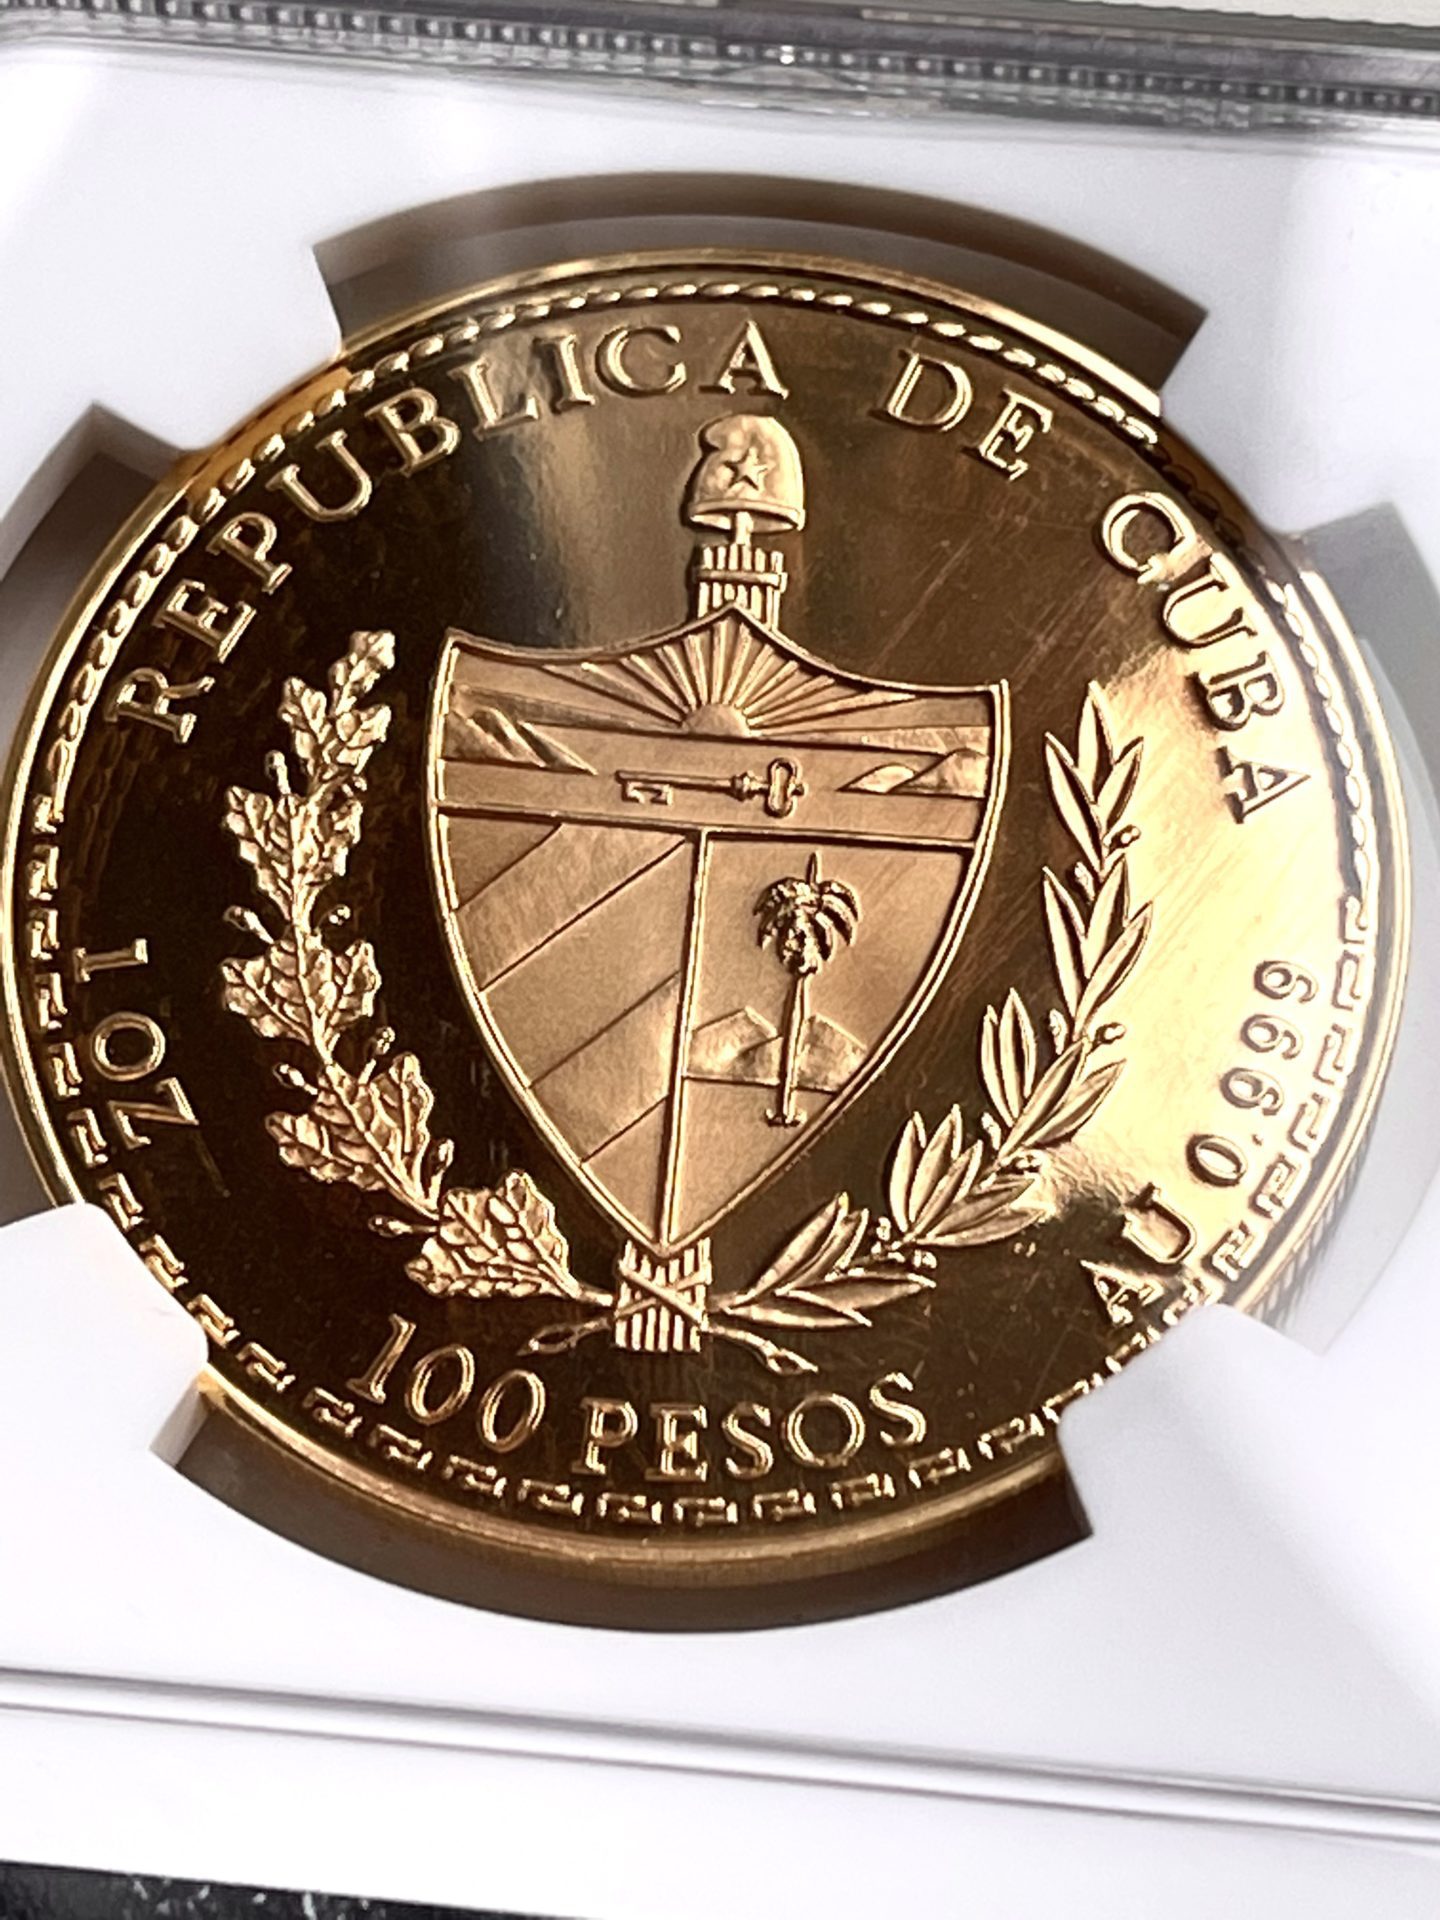 Cuba 100 Pesos 1991 Hatuey NGC PF68 UCAM